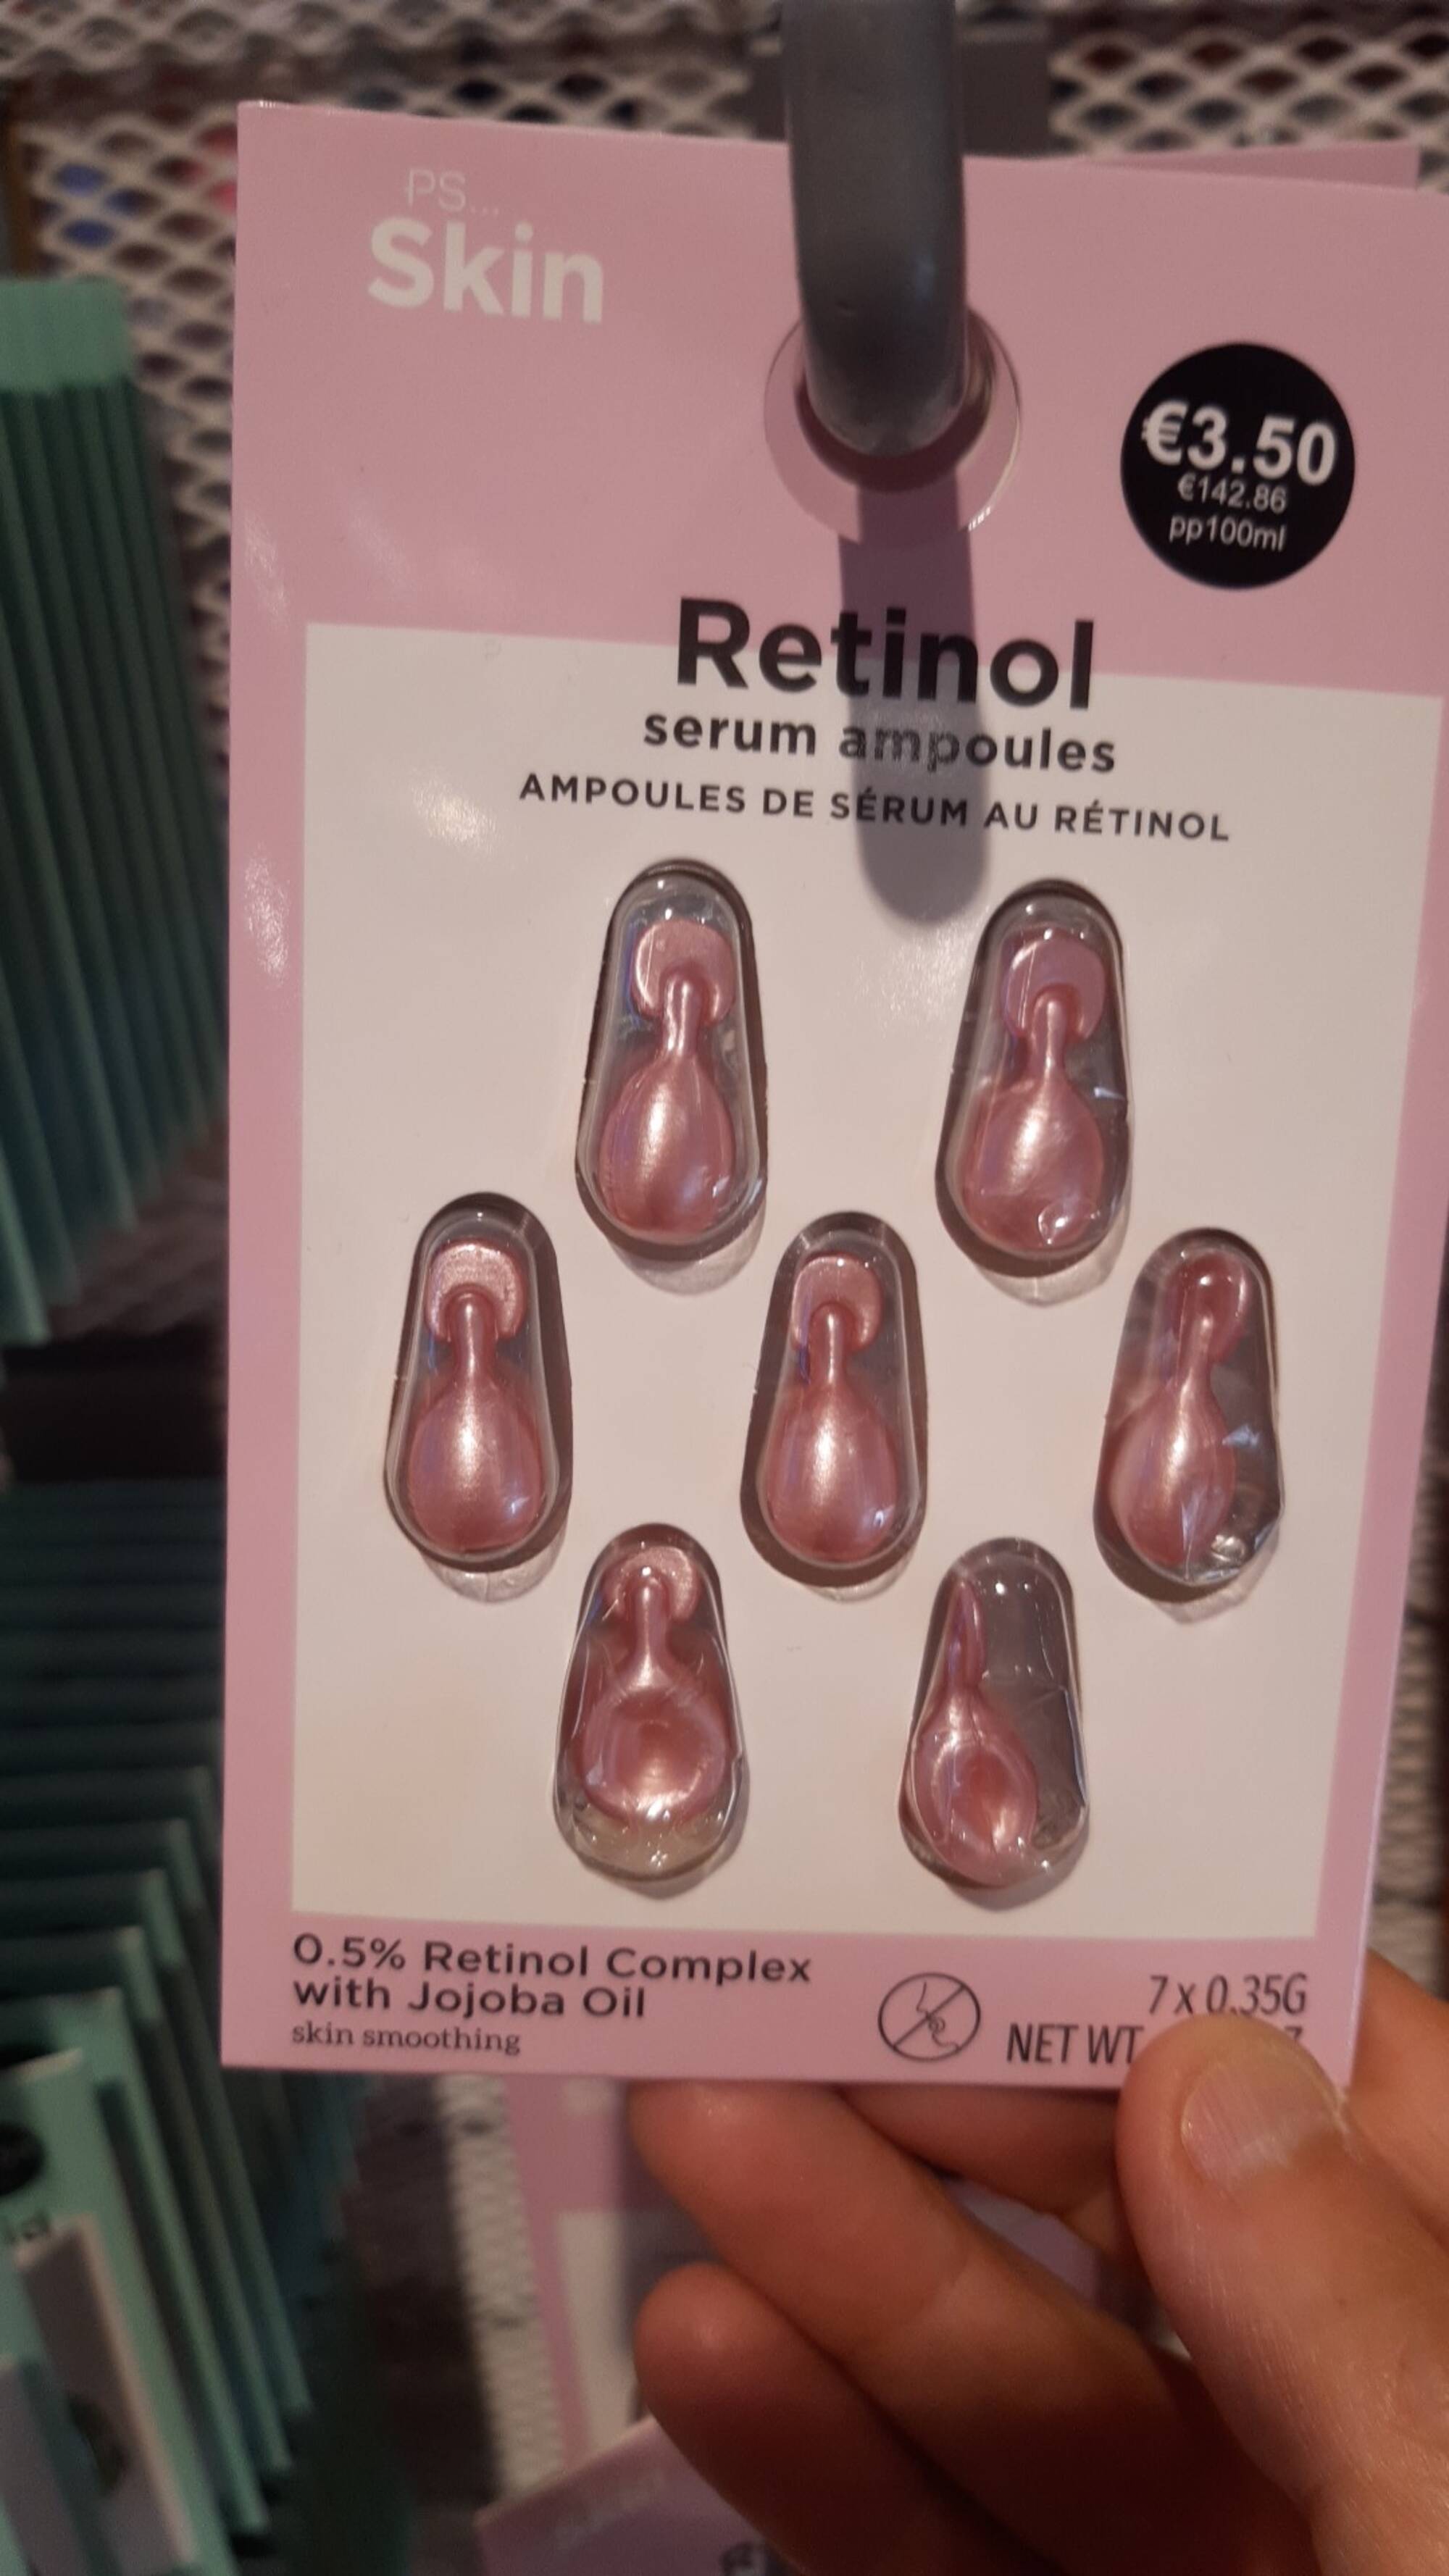 PS SKIN - Retinol -serum ampoules